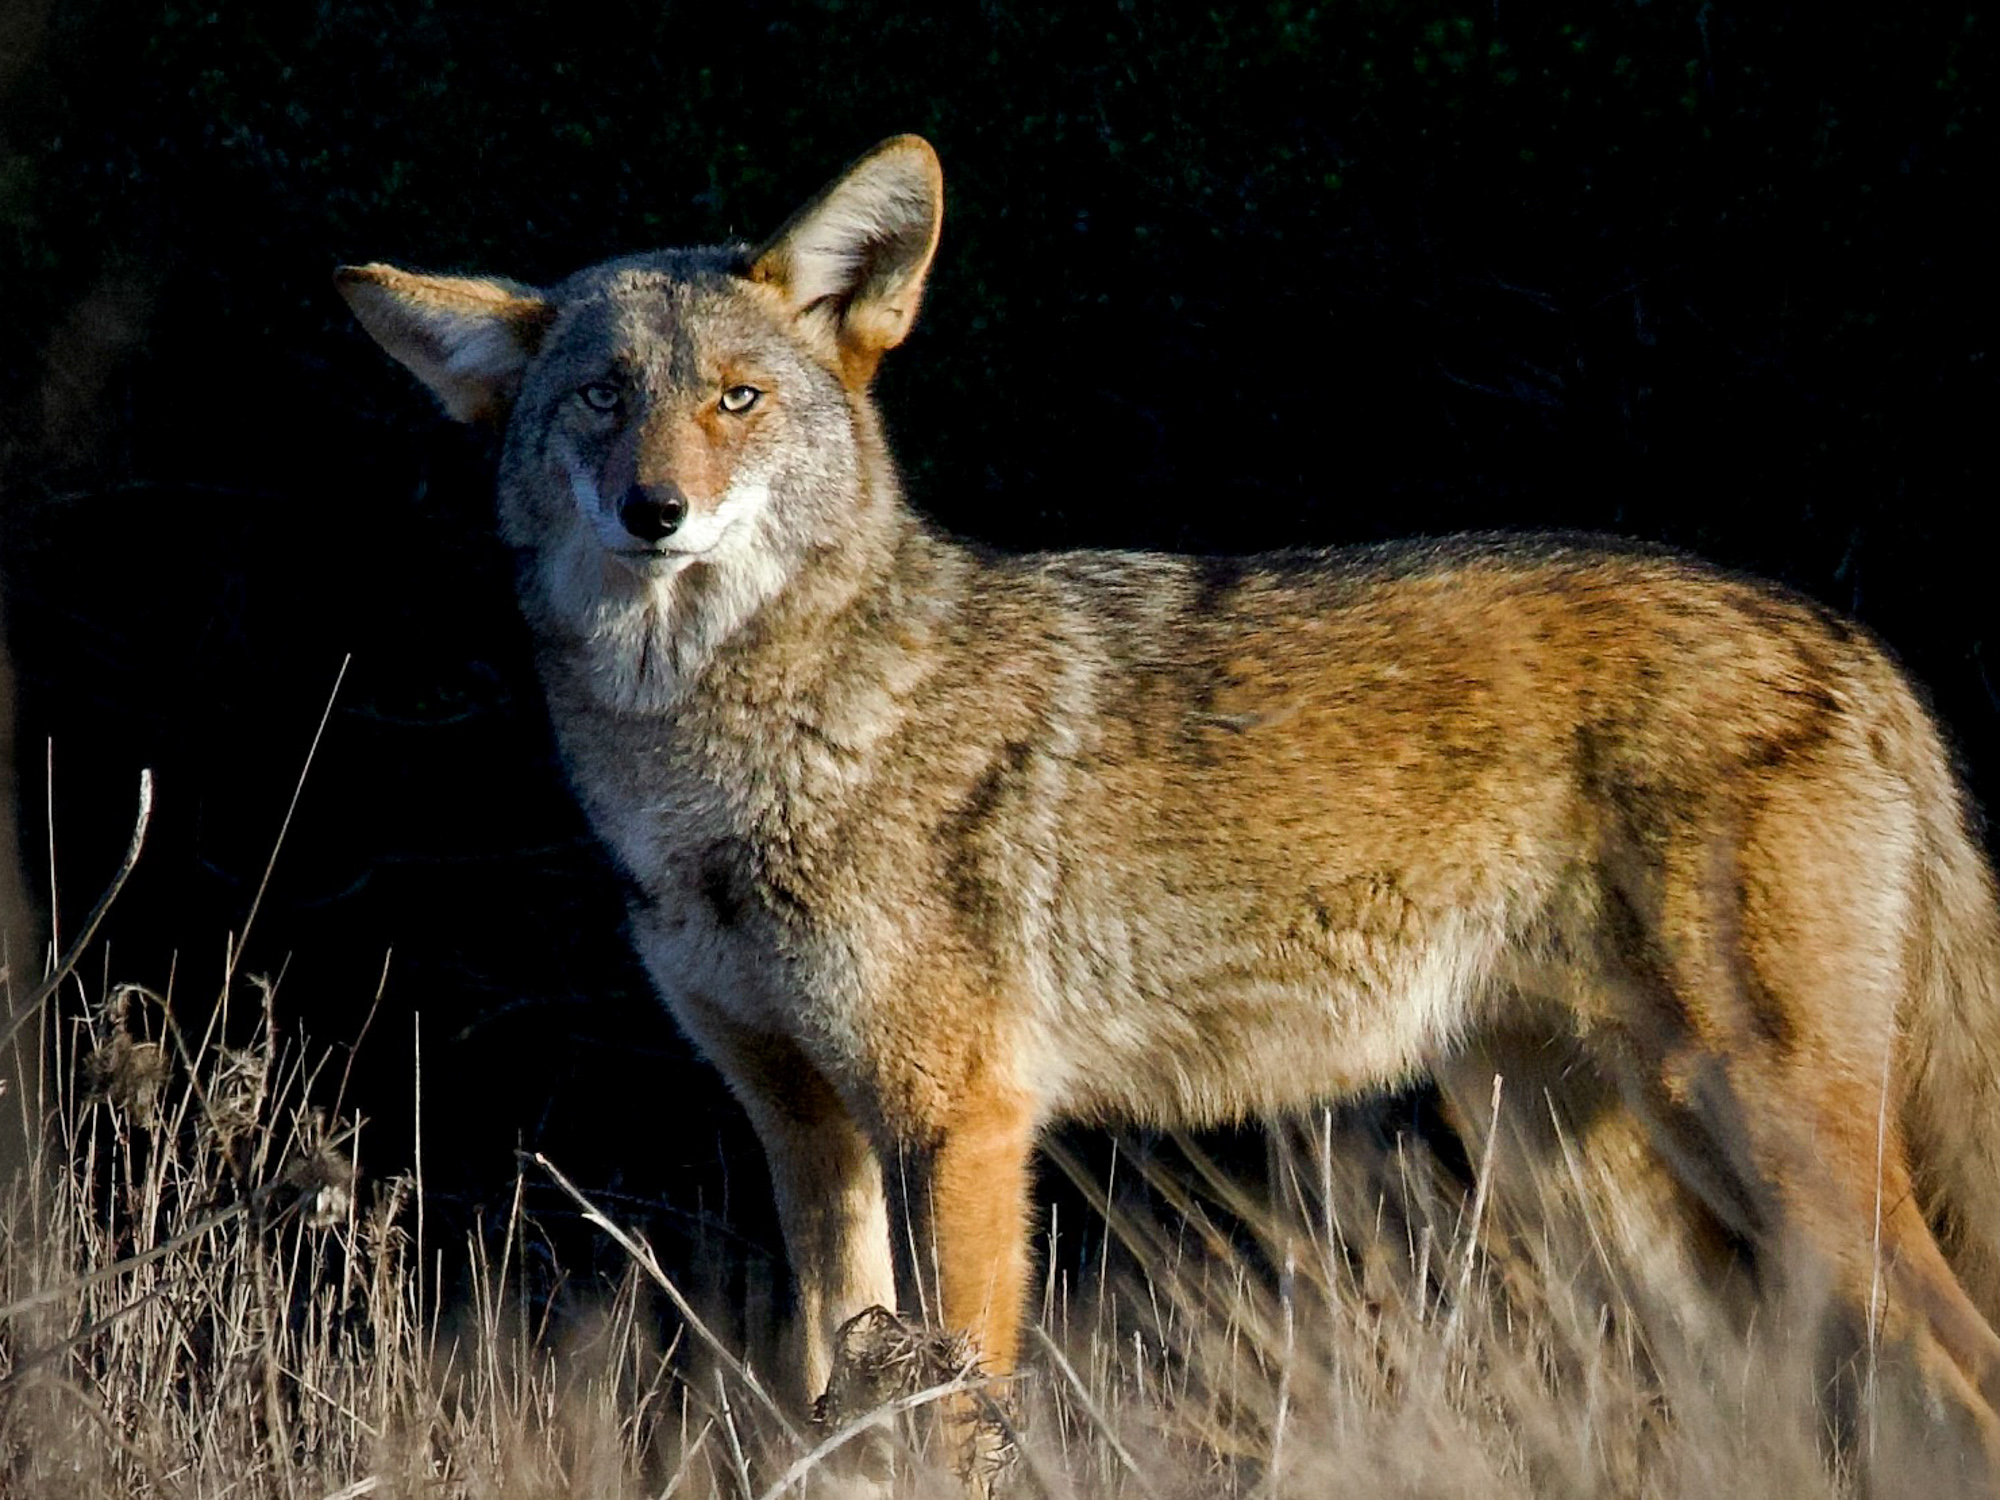 Coyote in Field